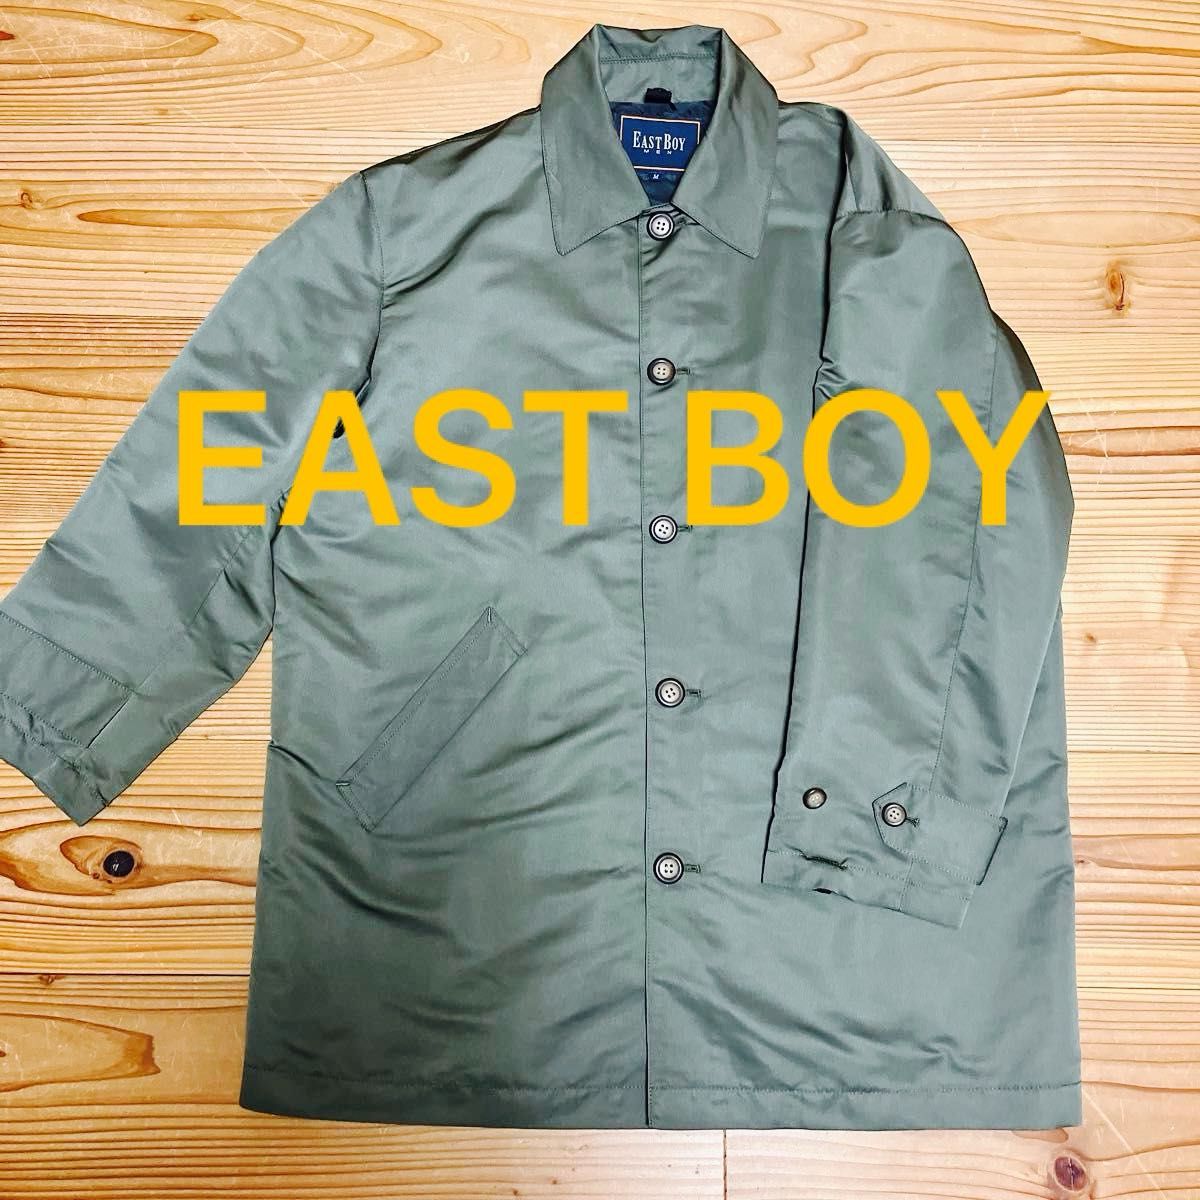 EAST BOYイーストボーイ  メンズ ステンカラーコート アウター フード付  コート ジャケット 中厚 薄手 春